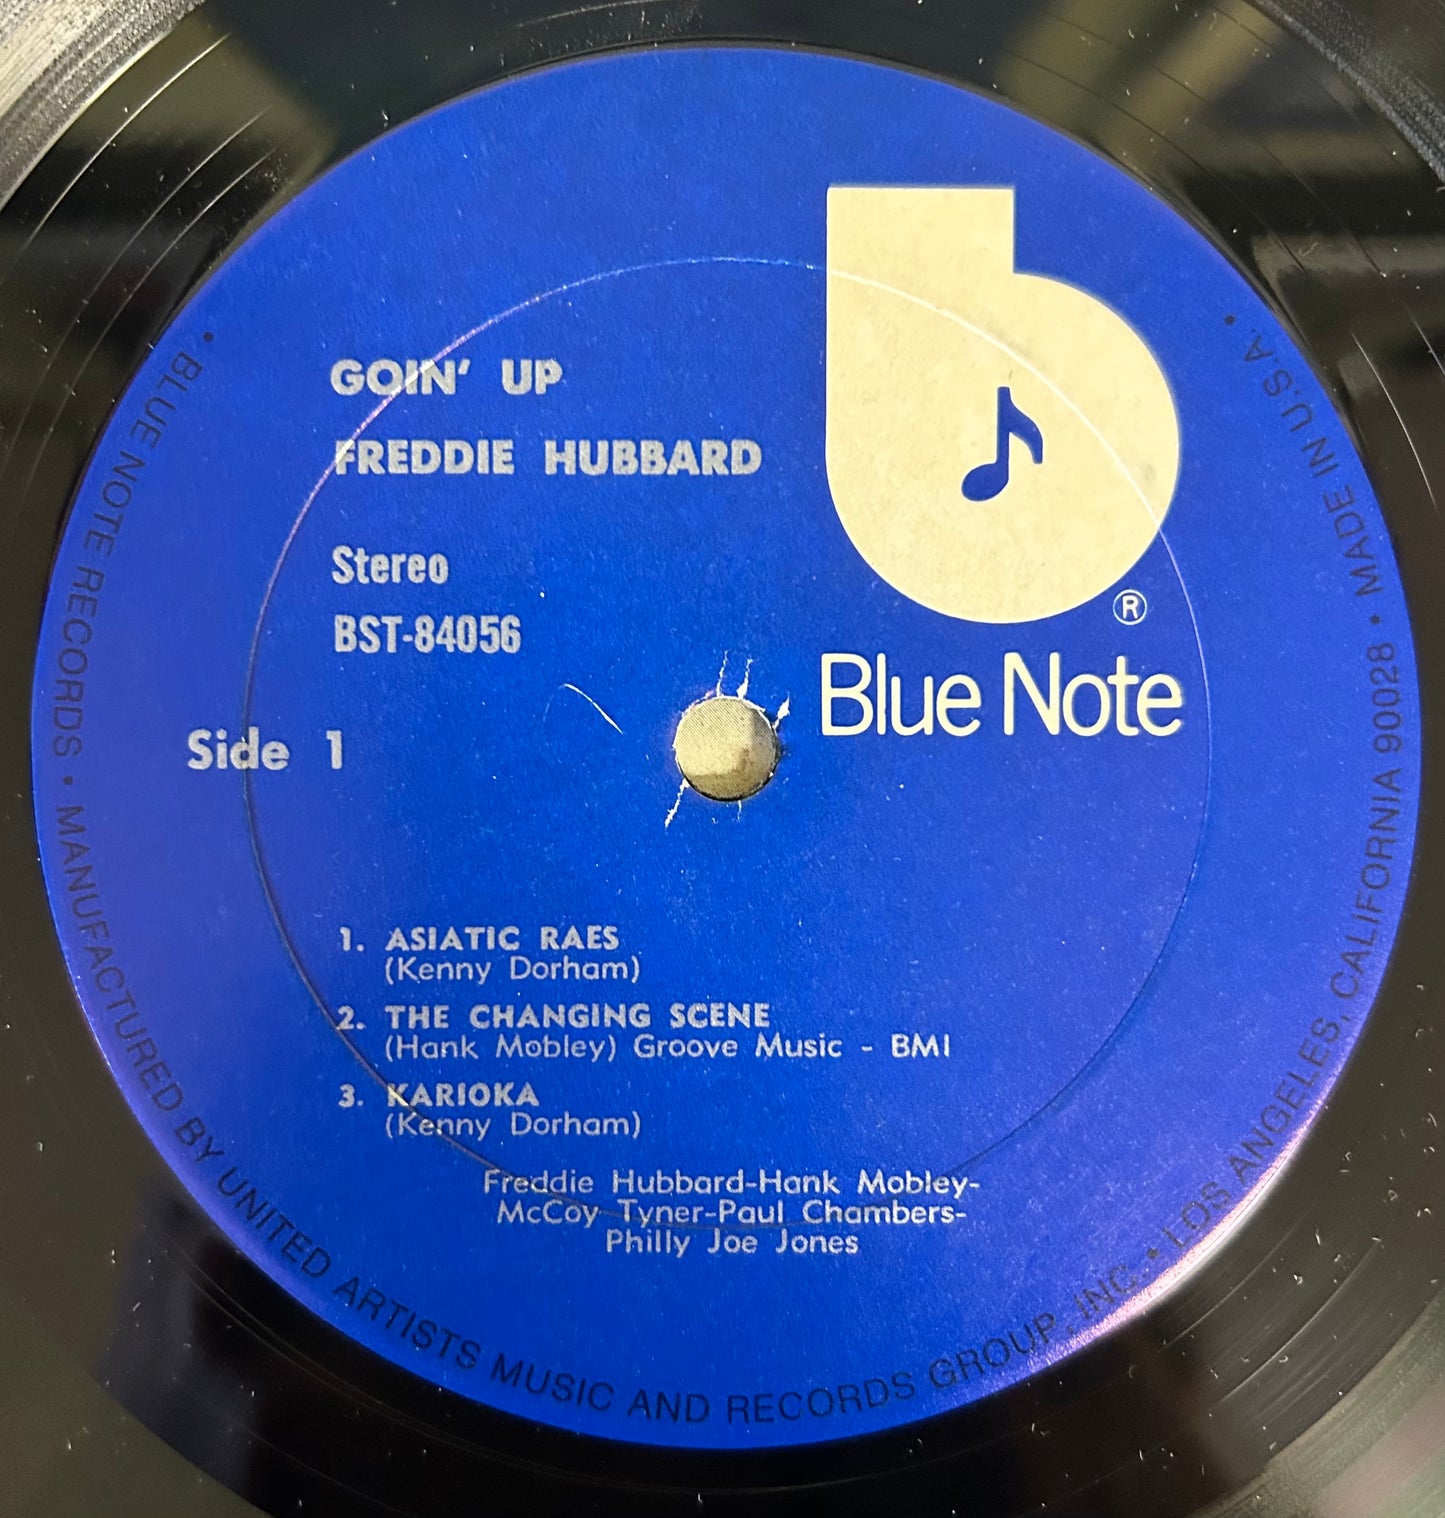 Freddie Hubbard - Goin’ Up 1975 Press White "b" UA Repress